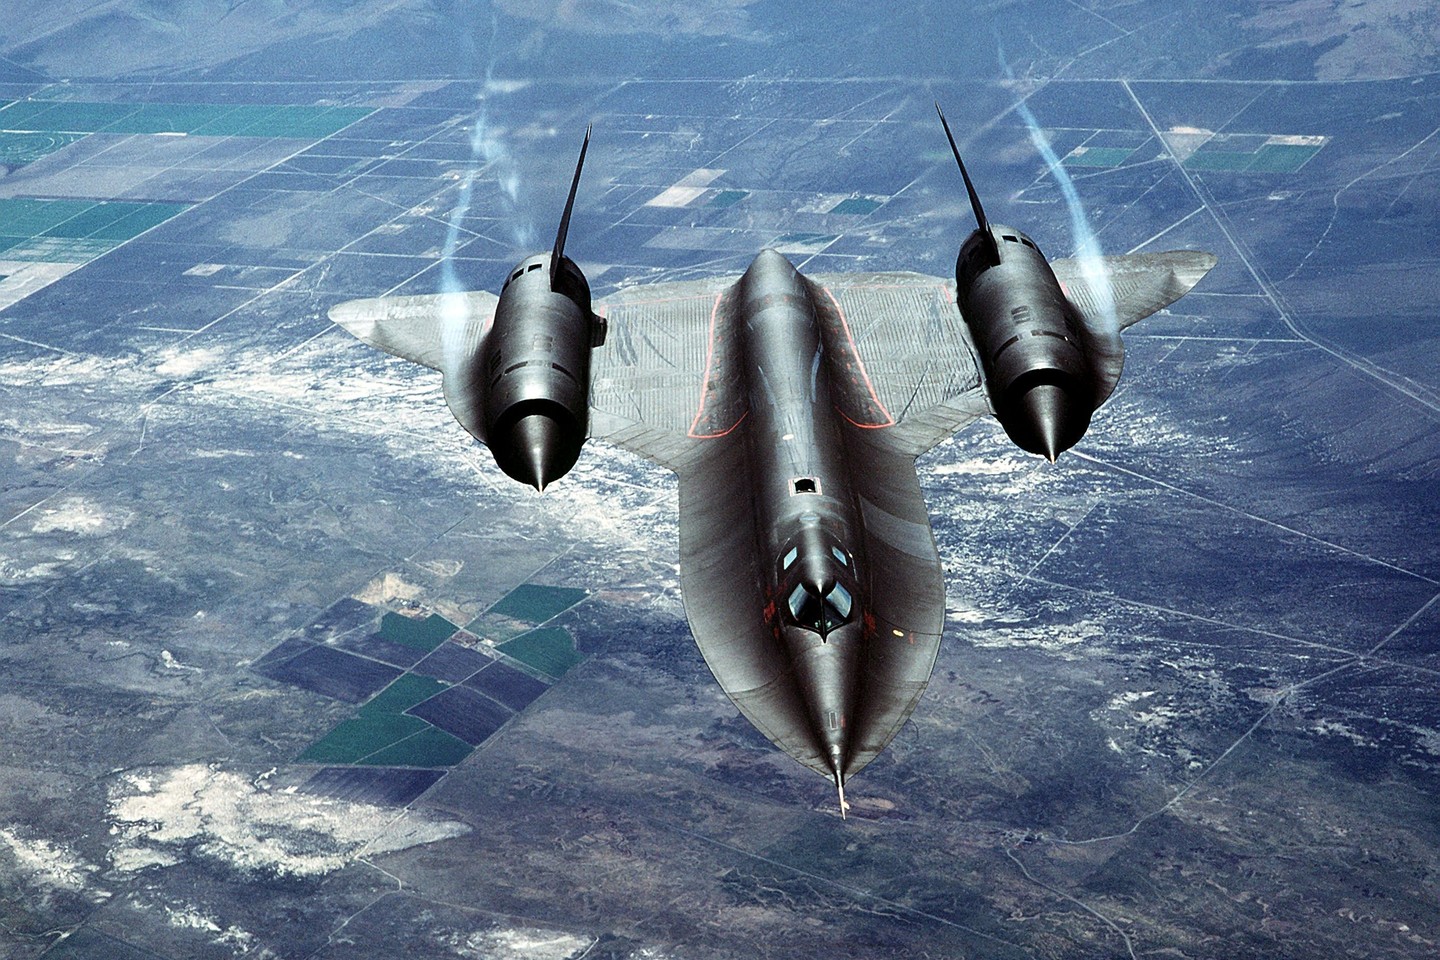 Žvalgybinis lėktuvas "Lockheed SR-71 Blackbird".<br>Vida Press nuotr.